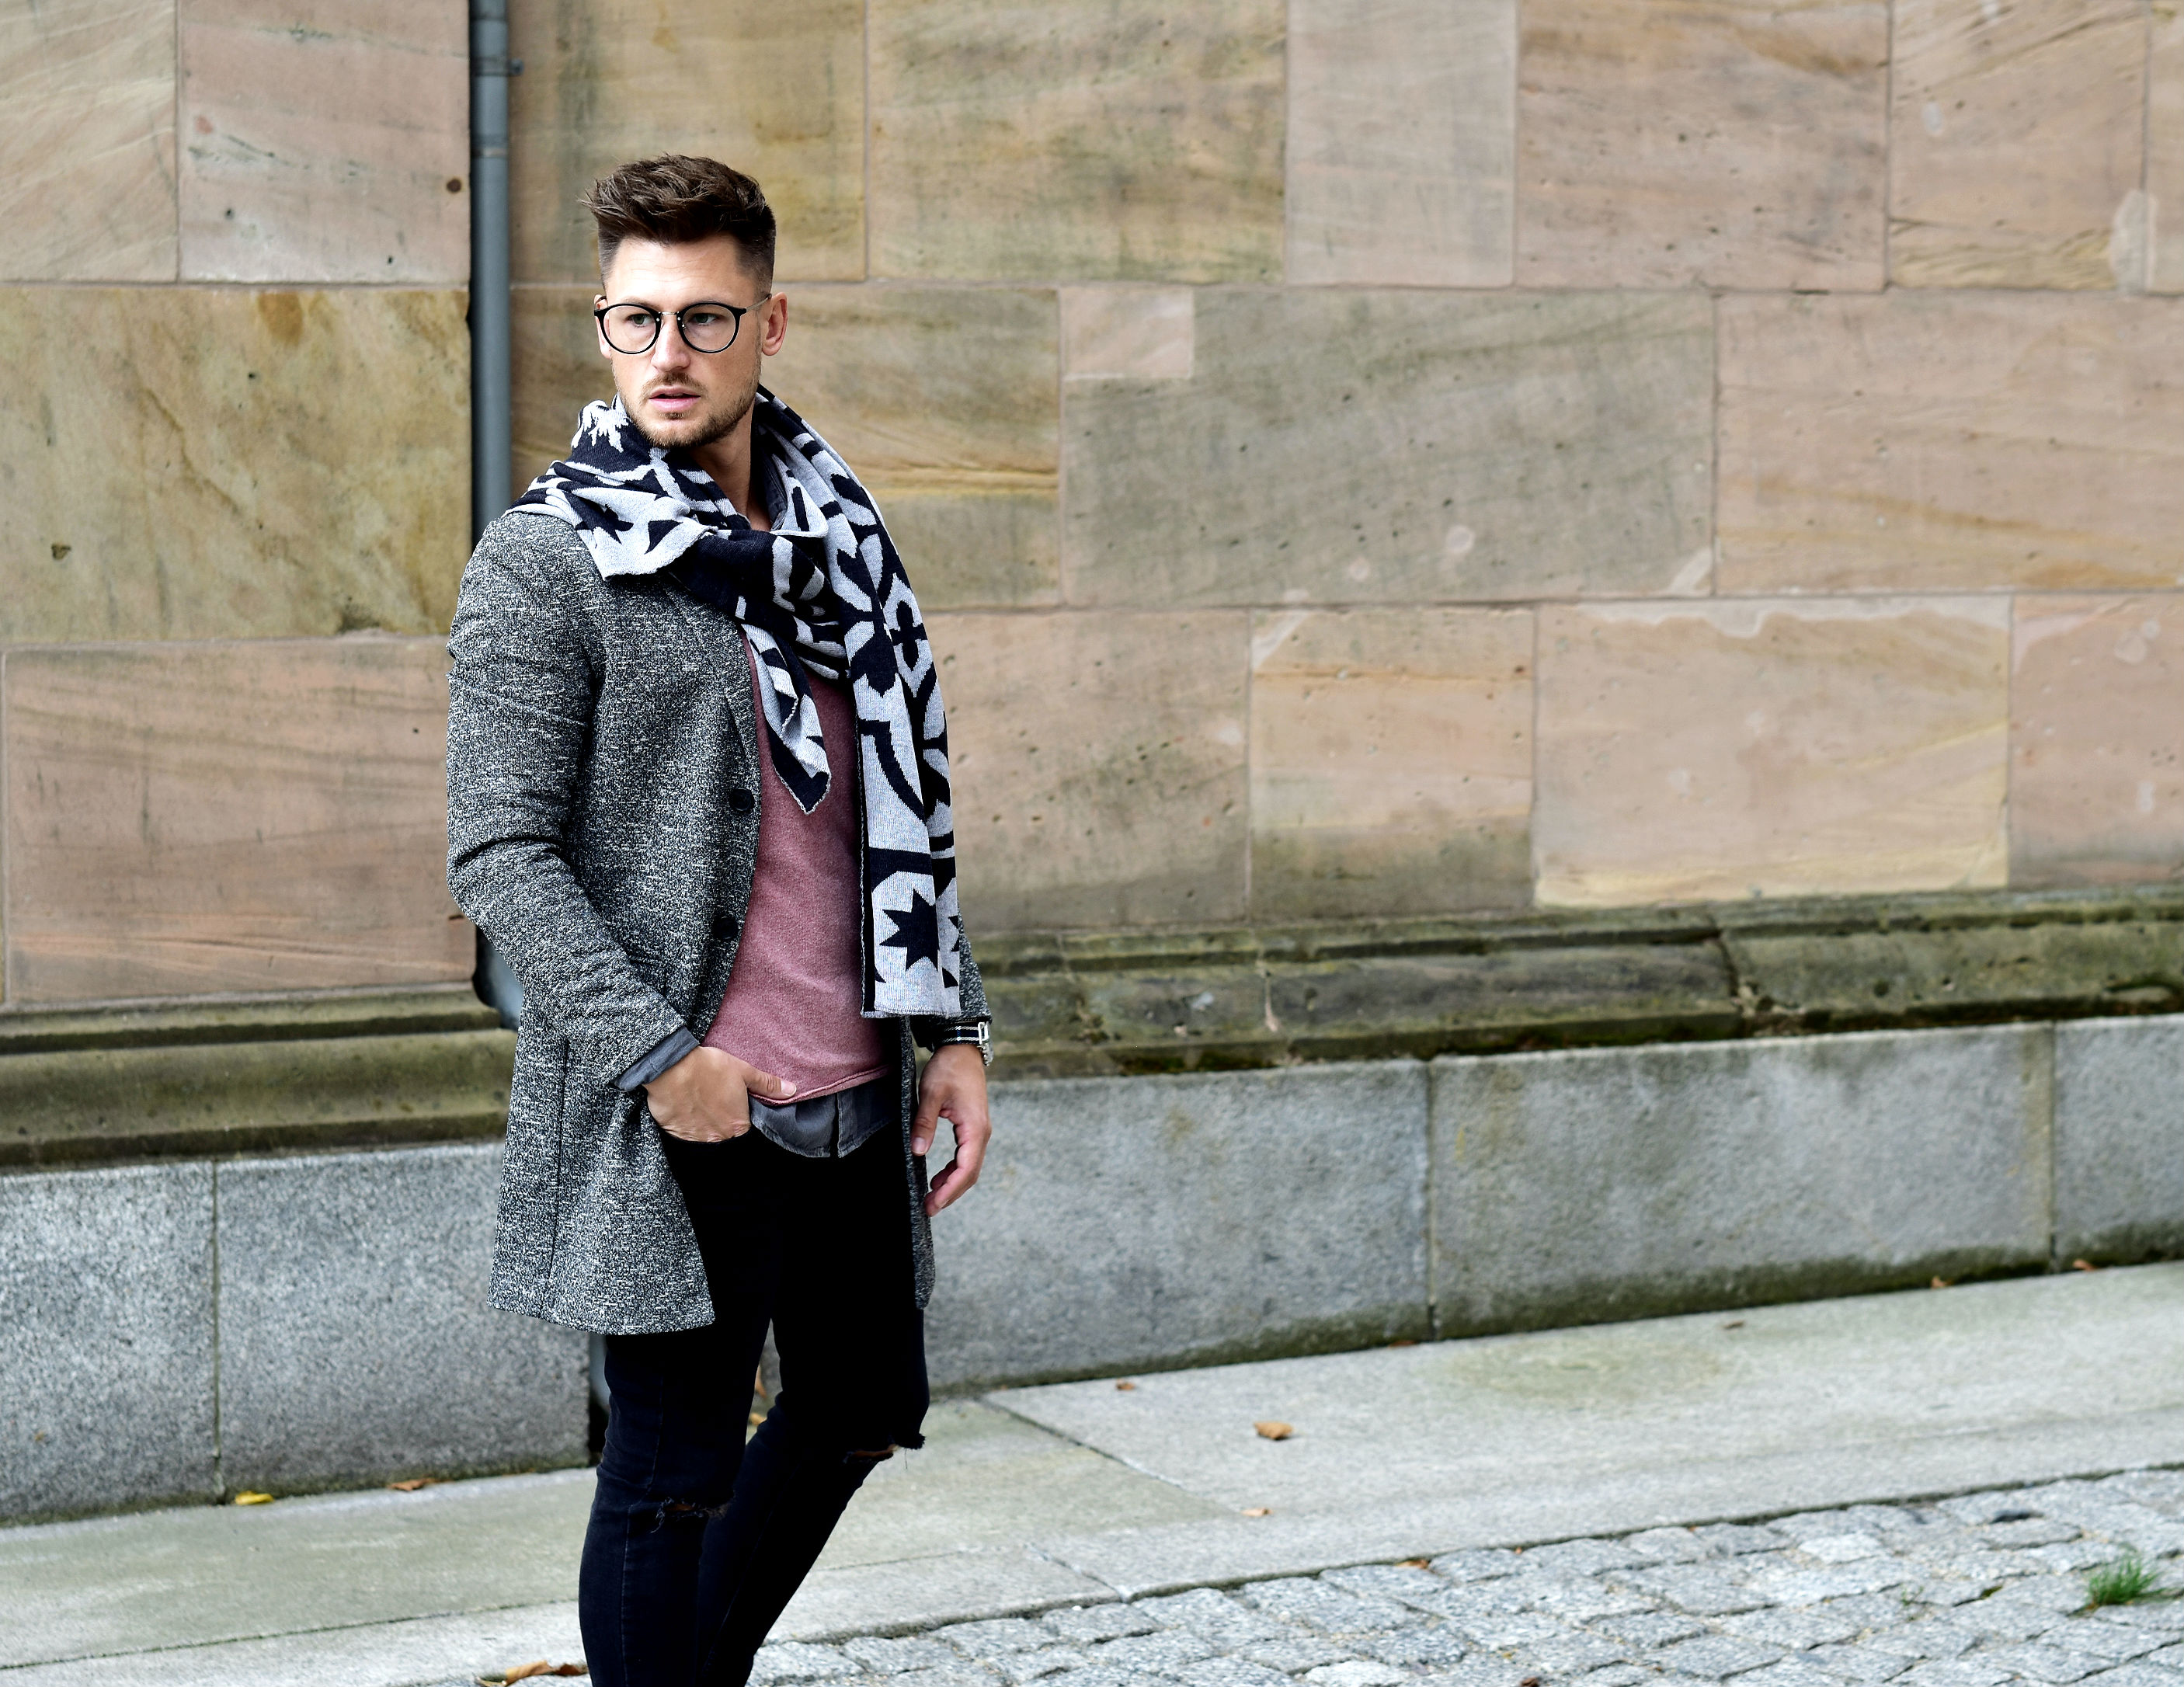 Tommeezjerry-Styleblog-Männerblog-Männer-Modeblog-Berlin-Berlinblog-Männermodeblog-Outfit-Long-Blazer-Mantel-Adidas-Stan-Smith-Streetstyle-Casual-Ripped-Jeans